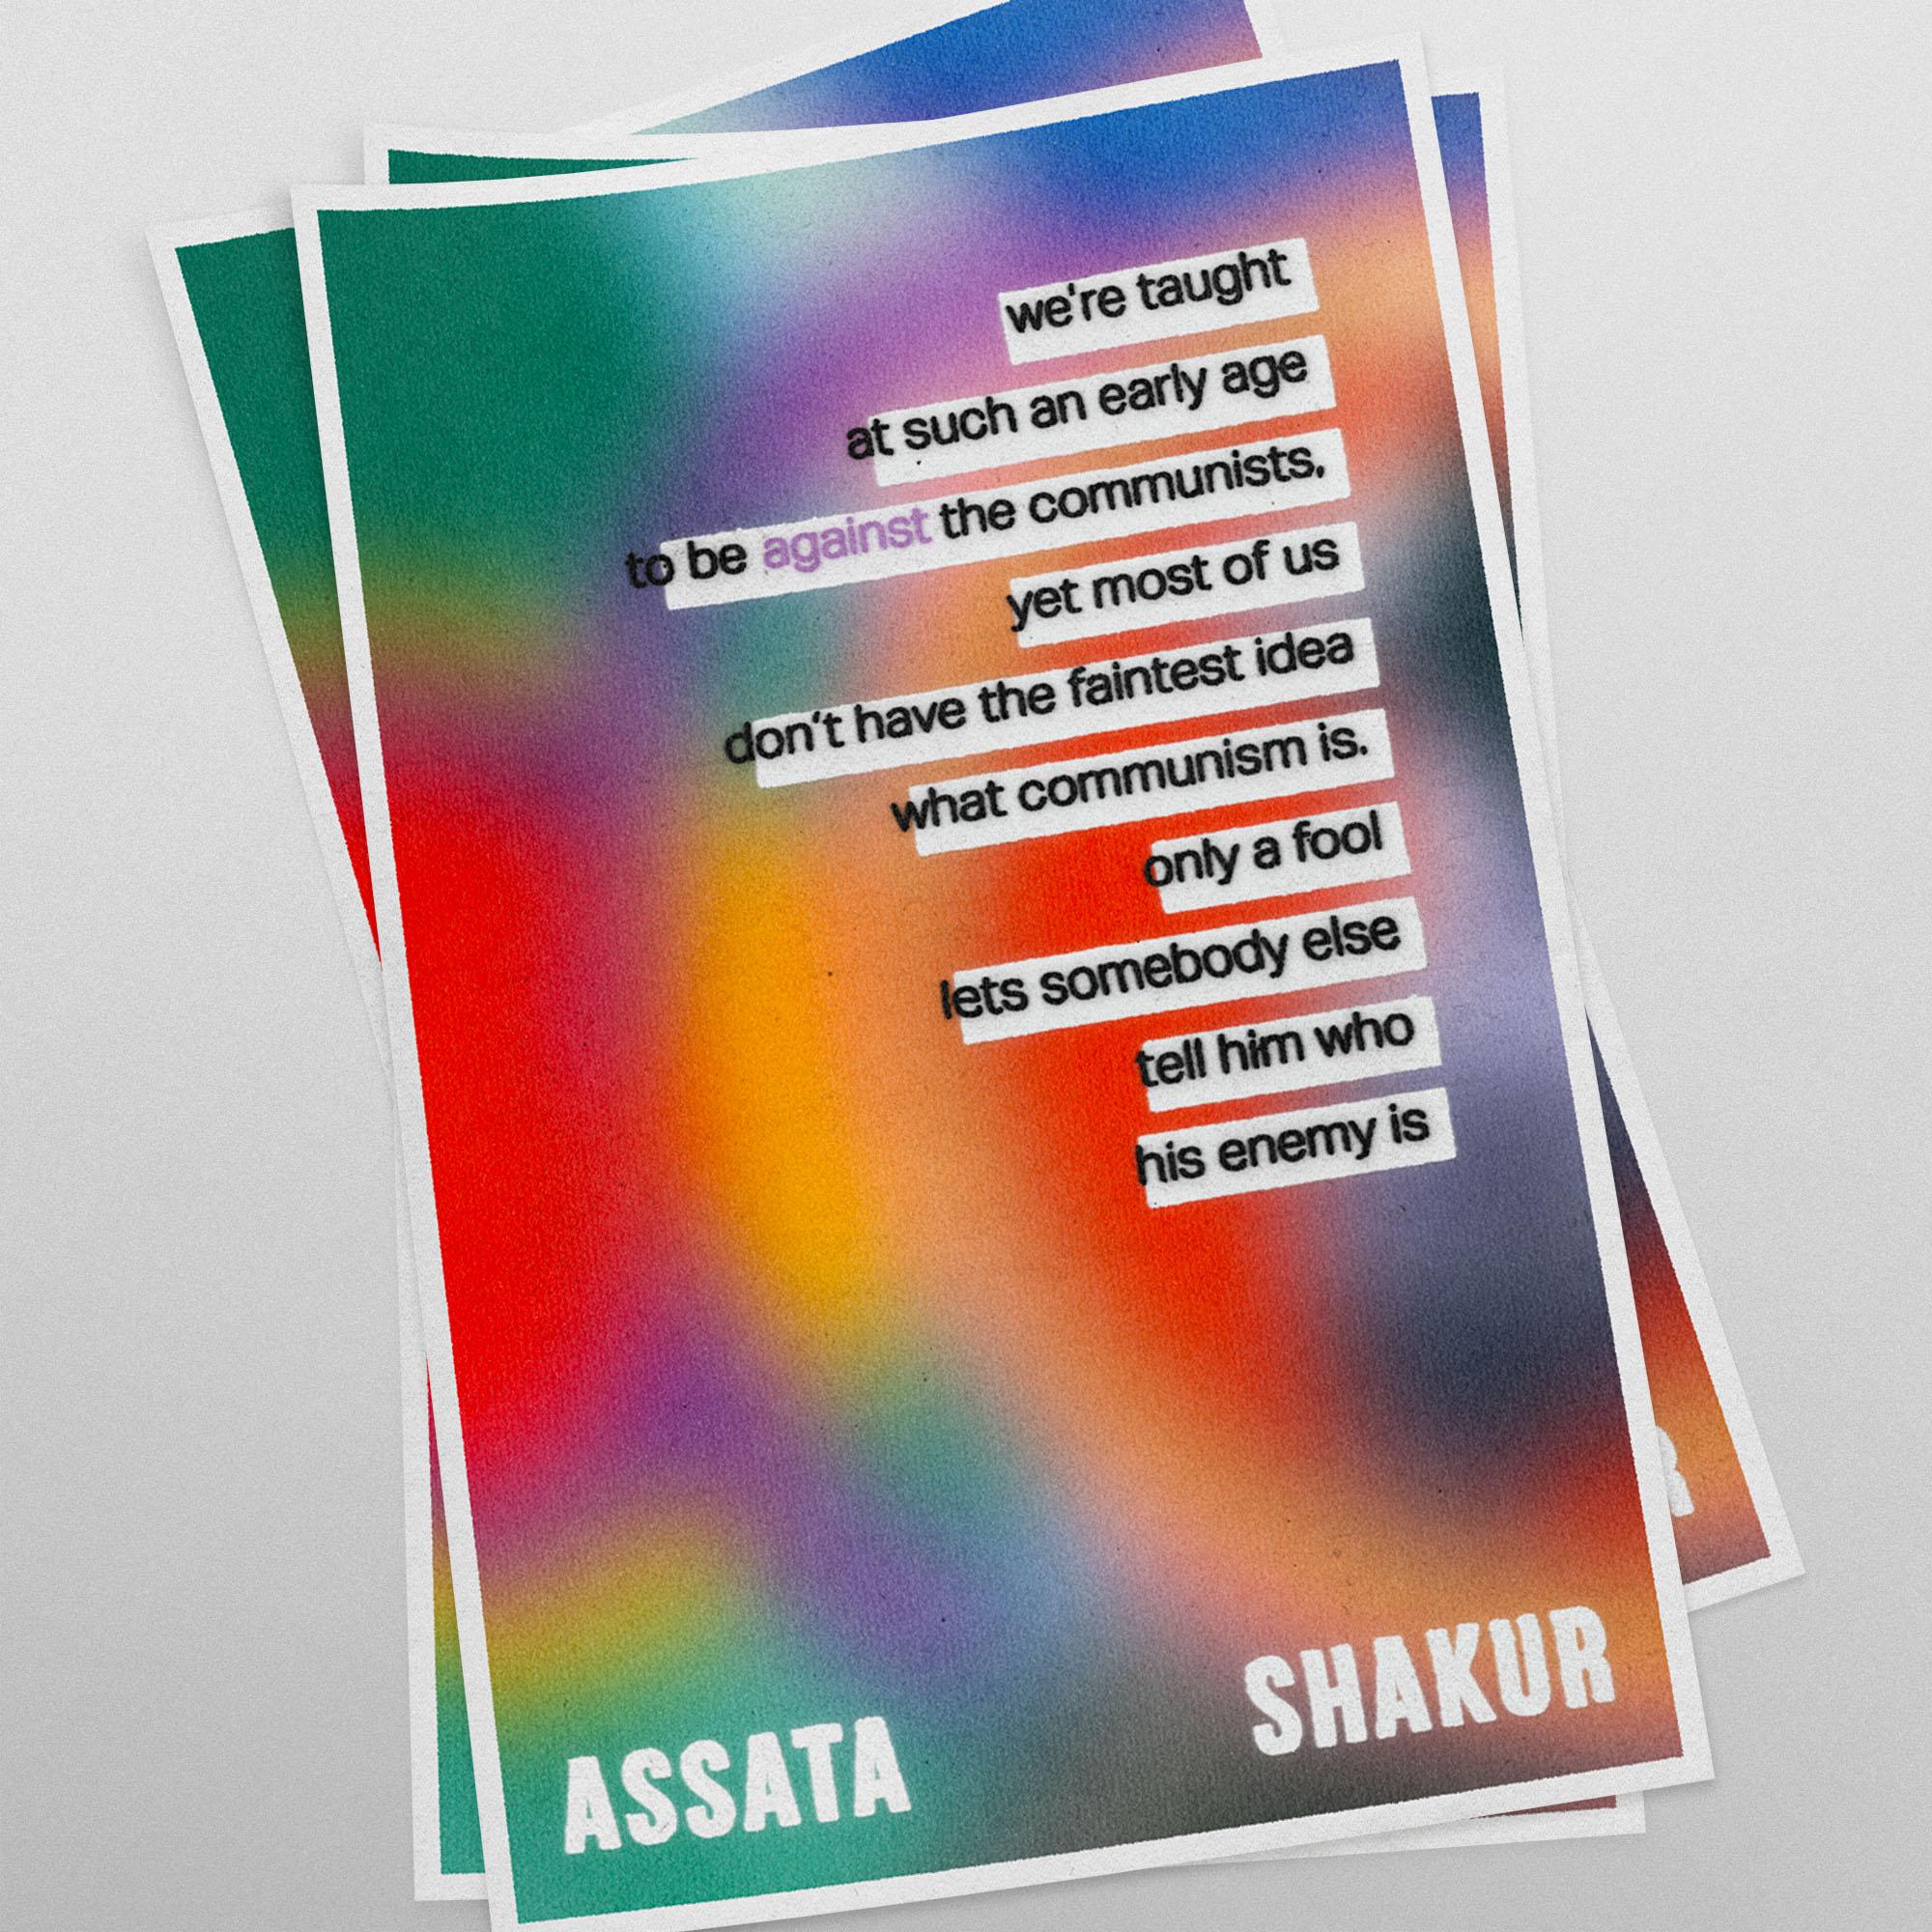 Assata quote (gradient)(11 x 17 Poster print) - Color Collective Press